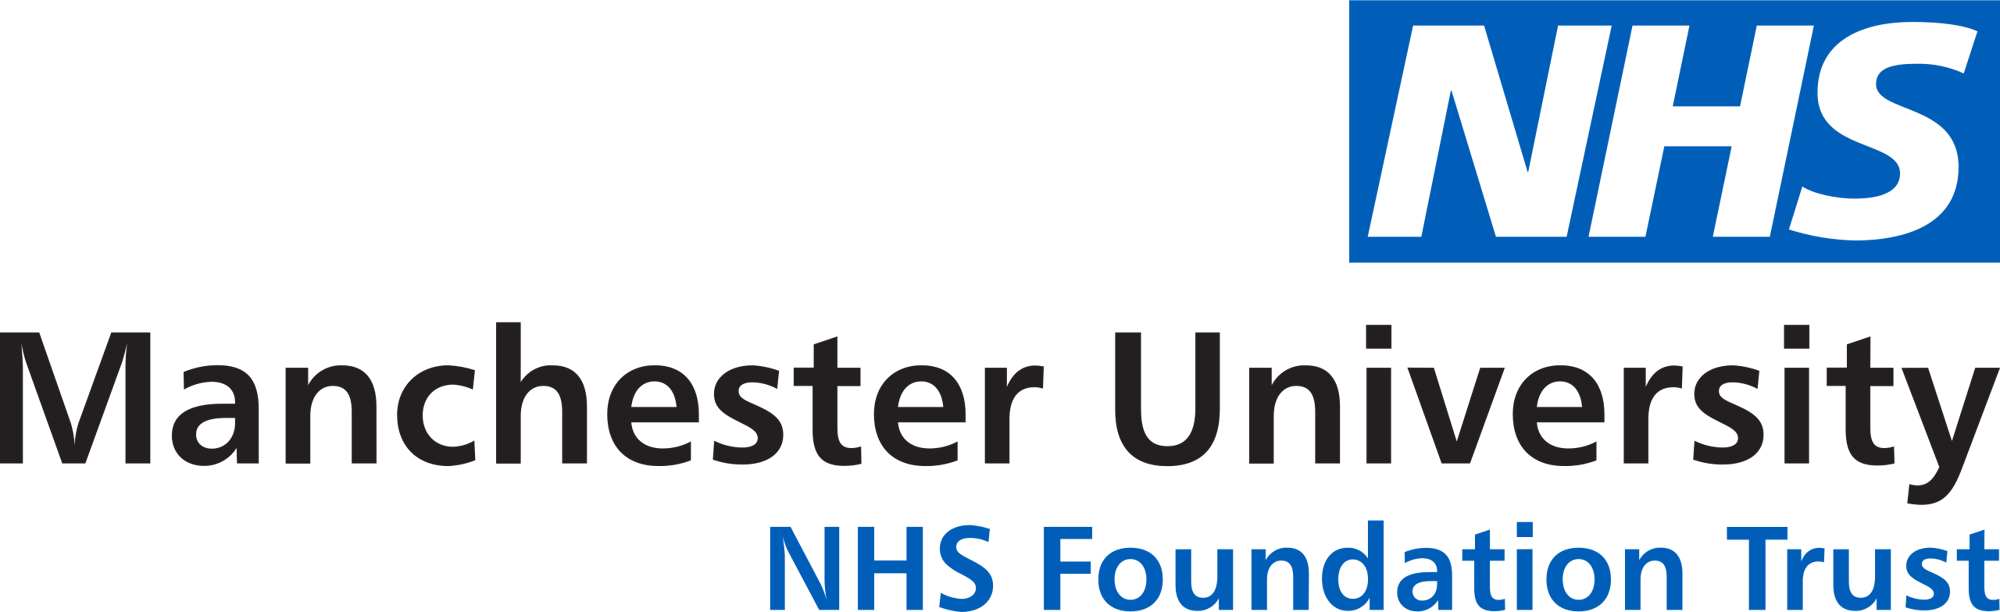 Manchester_University_NHS_Foundation_Trust_logo.svg